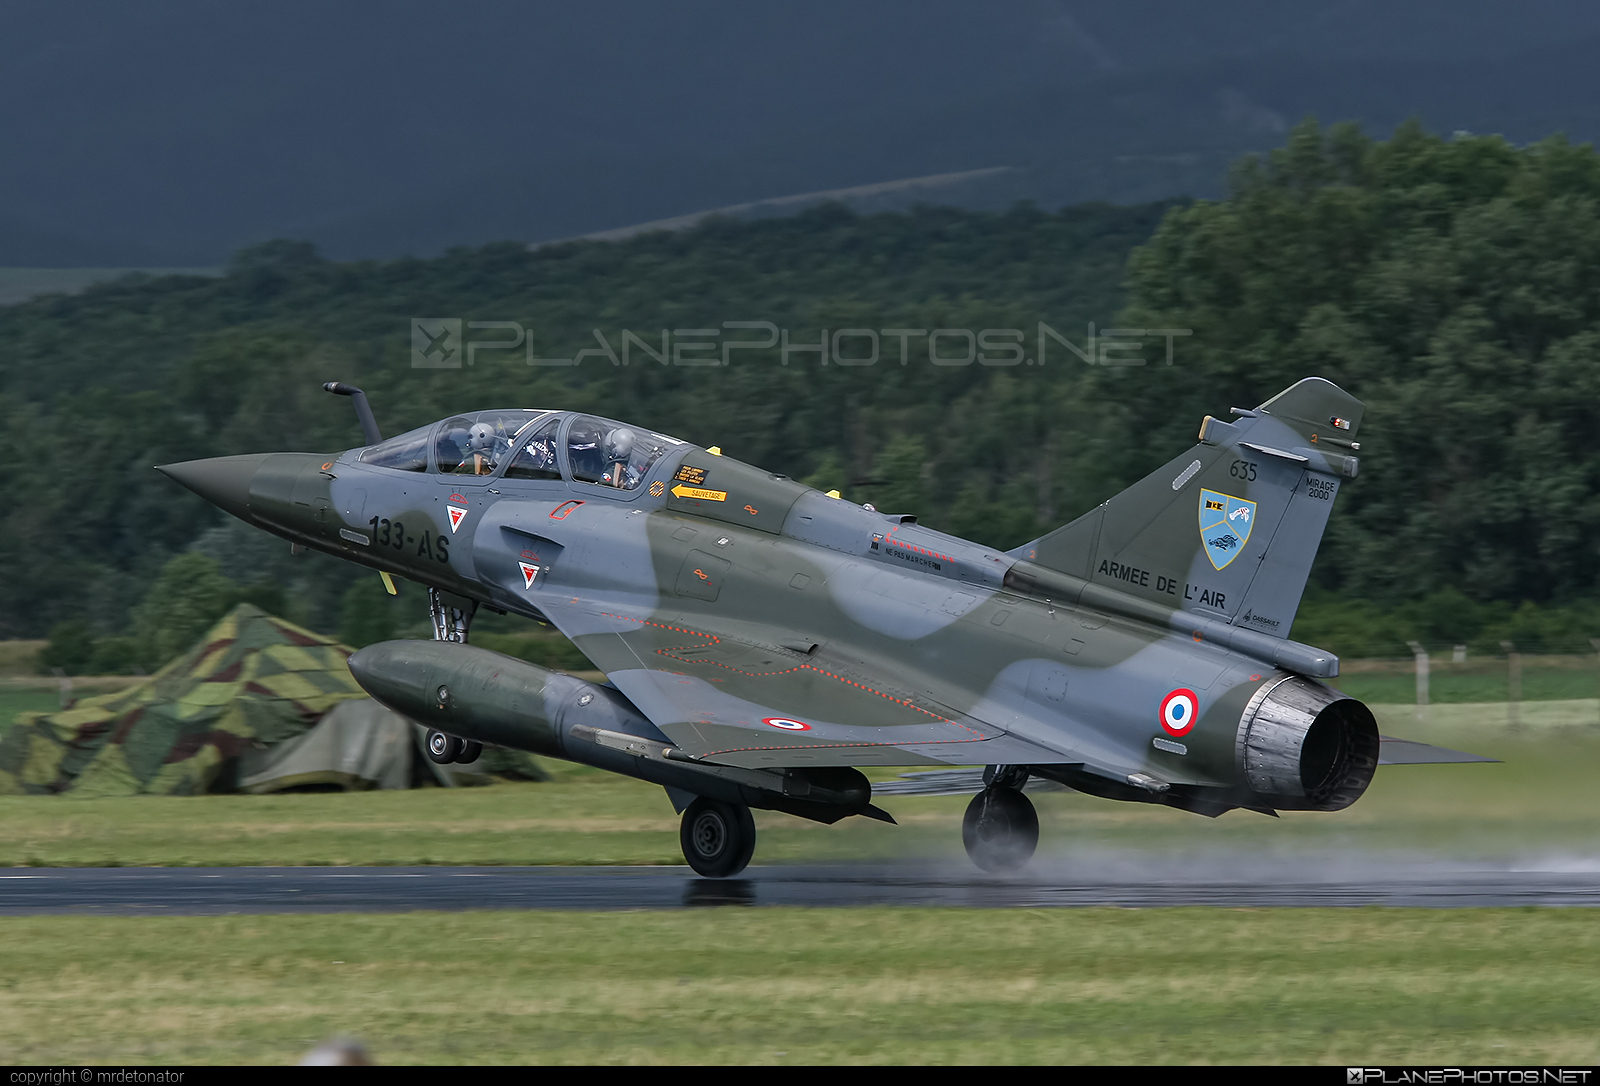 Dassault Mirage 2000D - 635 operated by Armée de l´Air (French Air Force) #DassaultMirage #DassaultMirage2000 #DassaultMirage2000d #armeedelair #dassault #dnh2009 #frenchairforce #mirage #mirage2000 #mirage2000d